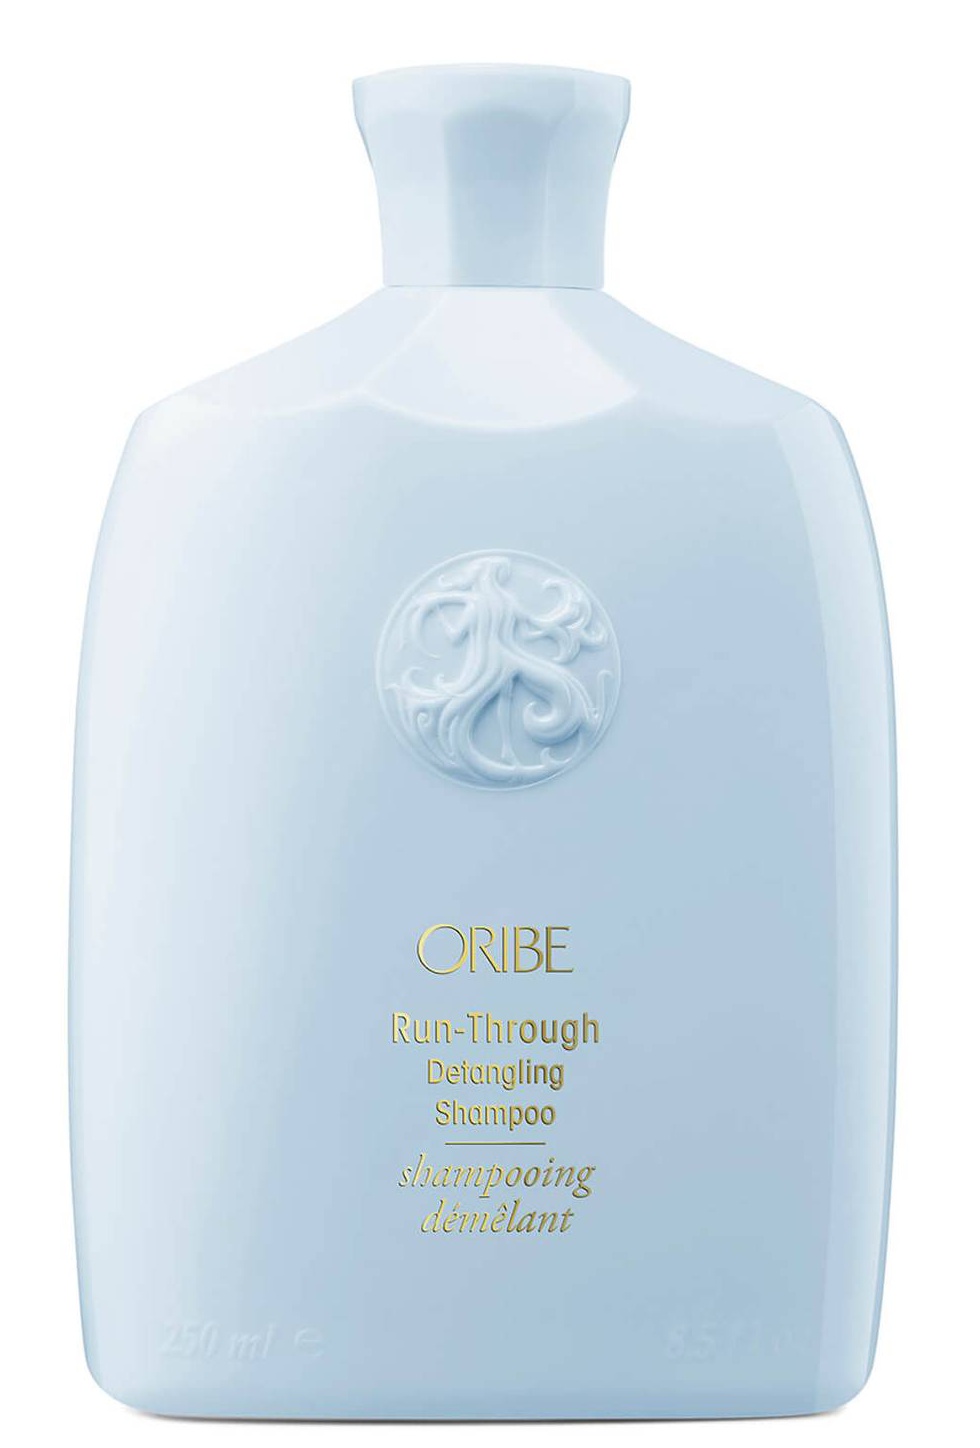 Oribe Run-through Detangling Shampoo